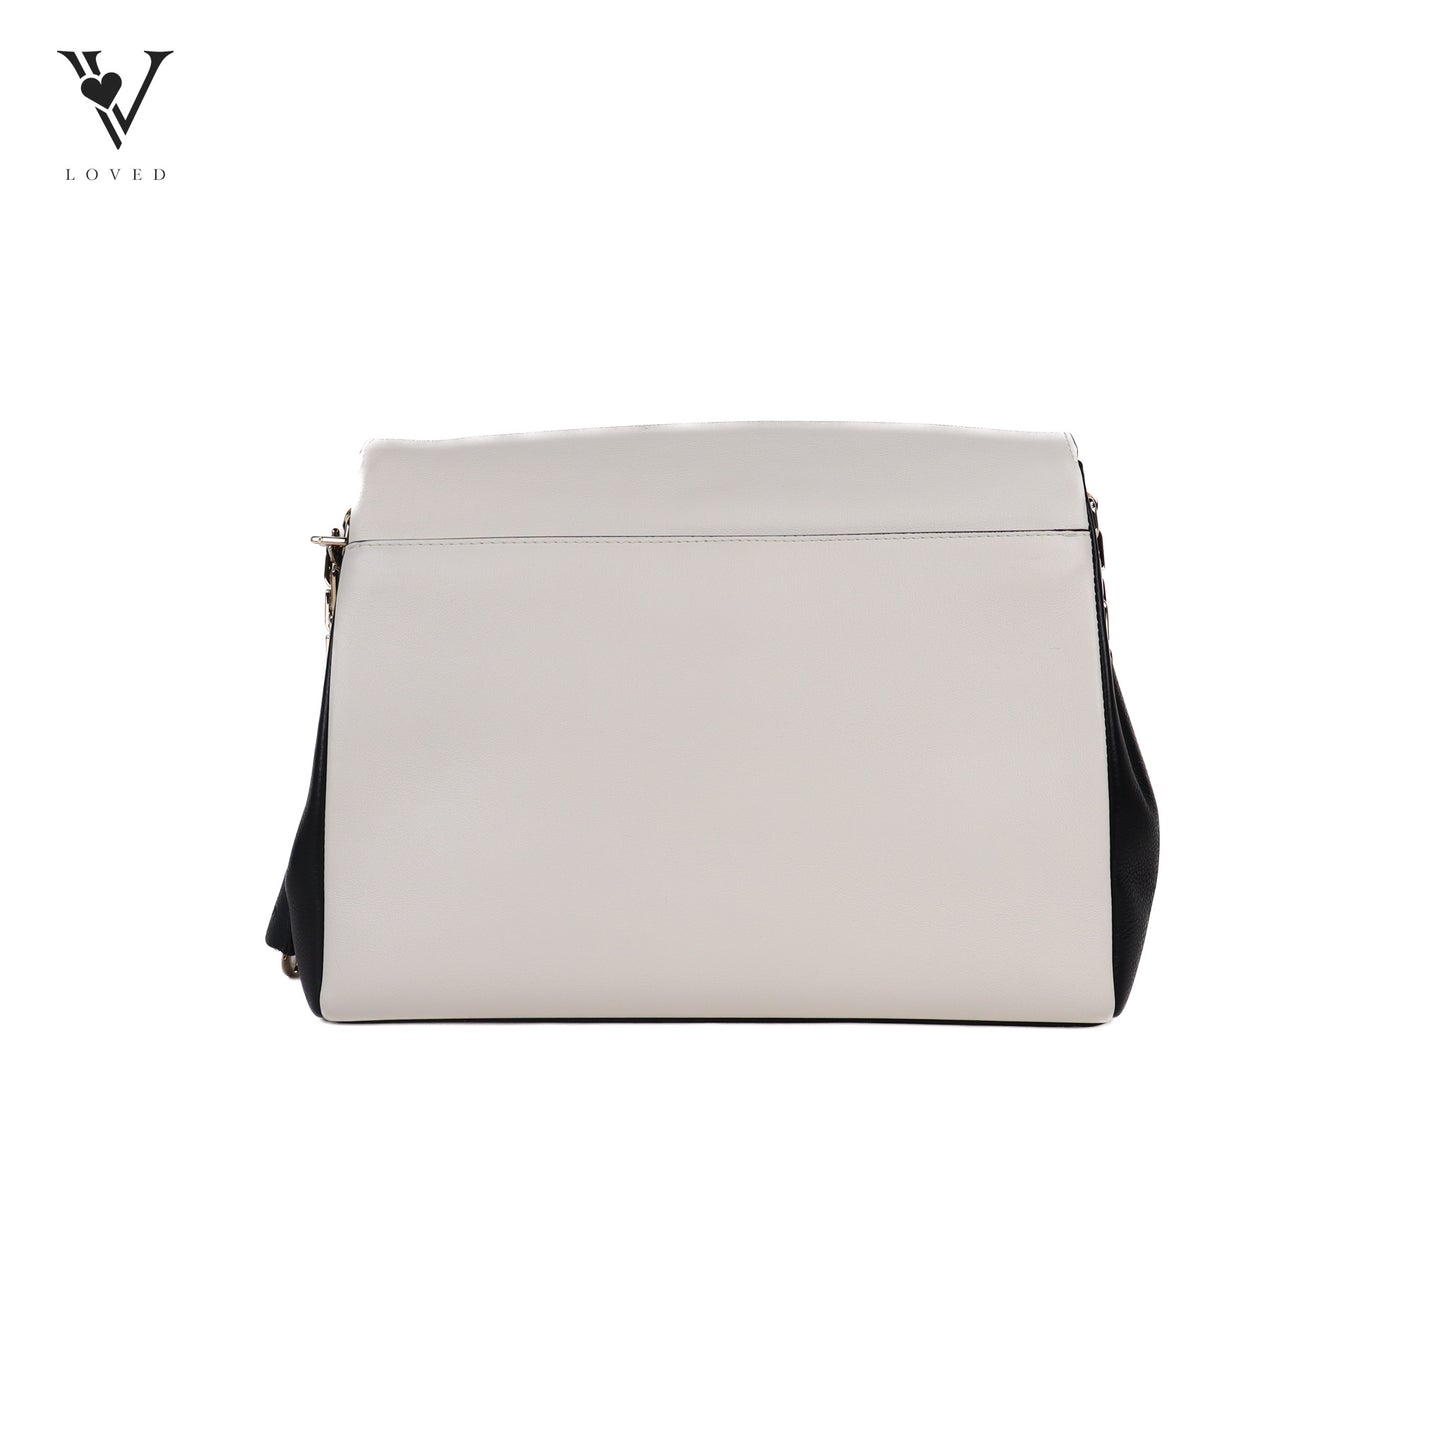 Diorling Shoulder Bag in Off-white and Black Leather